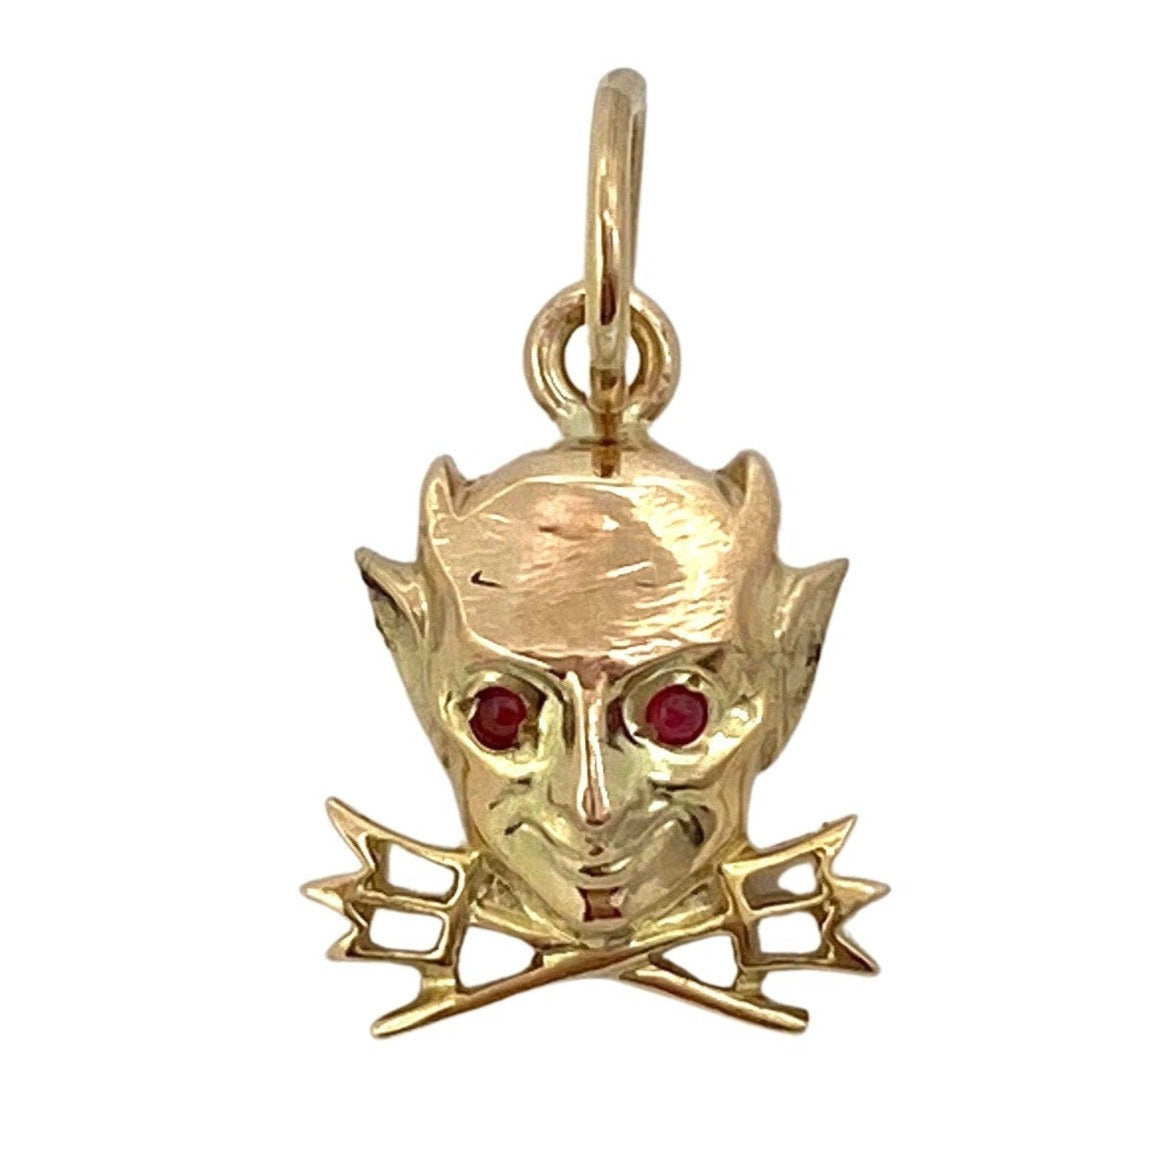 reimagined V I N T A G E // devilish details / 10k solid yellow gold / devil fraternal pin conversion / charm or pendant